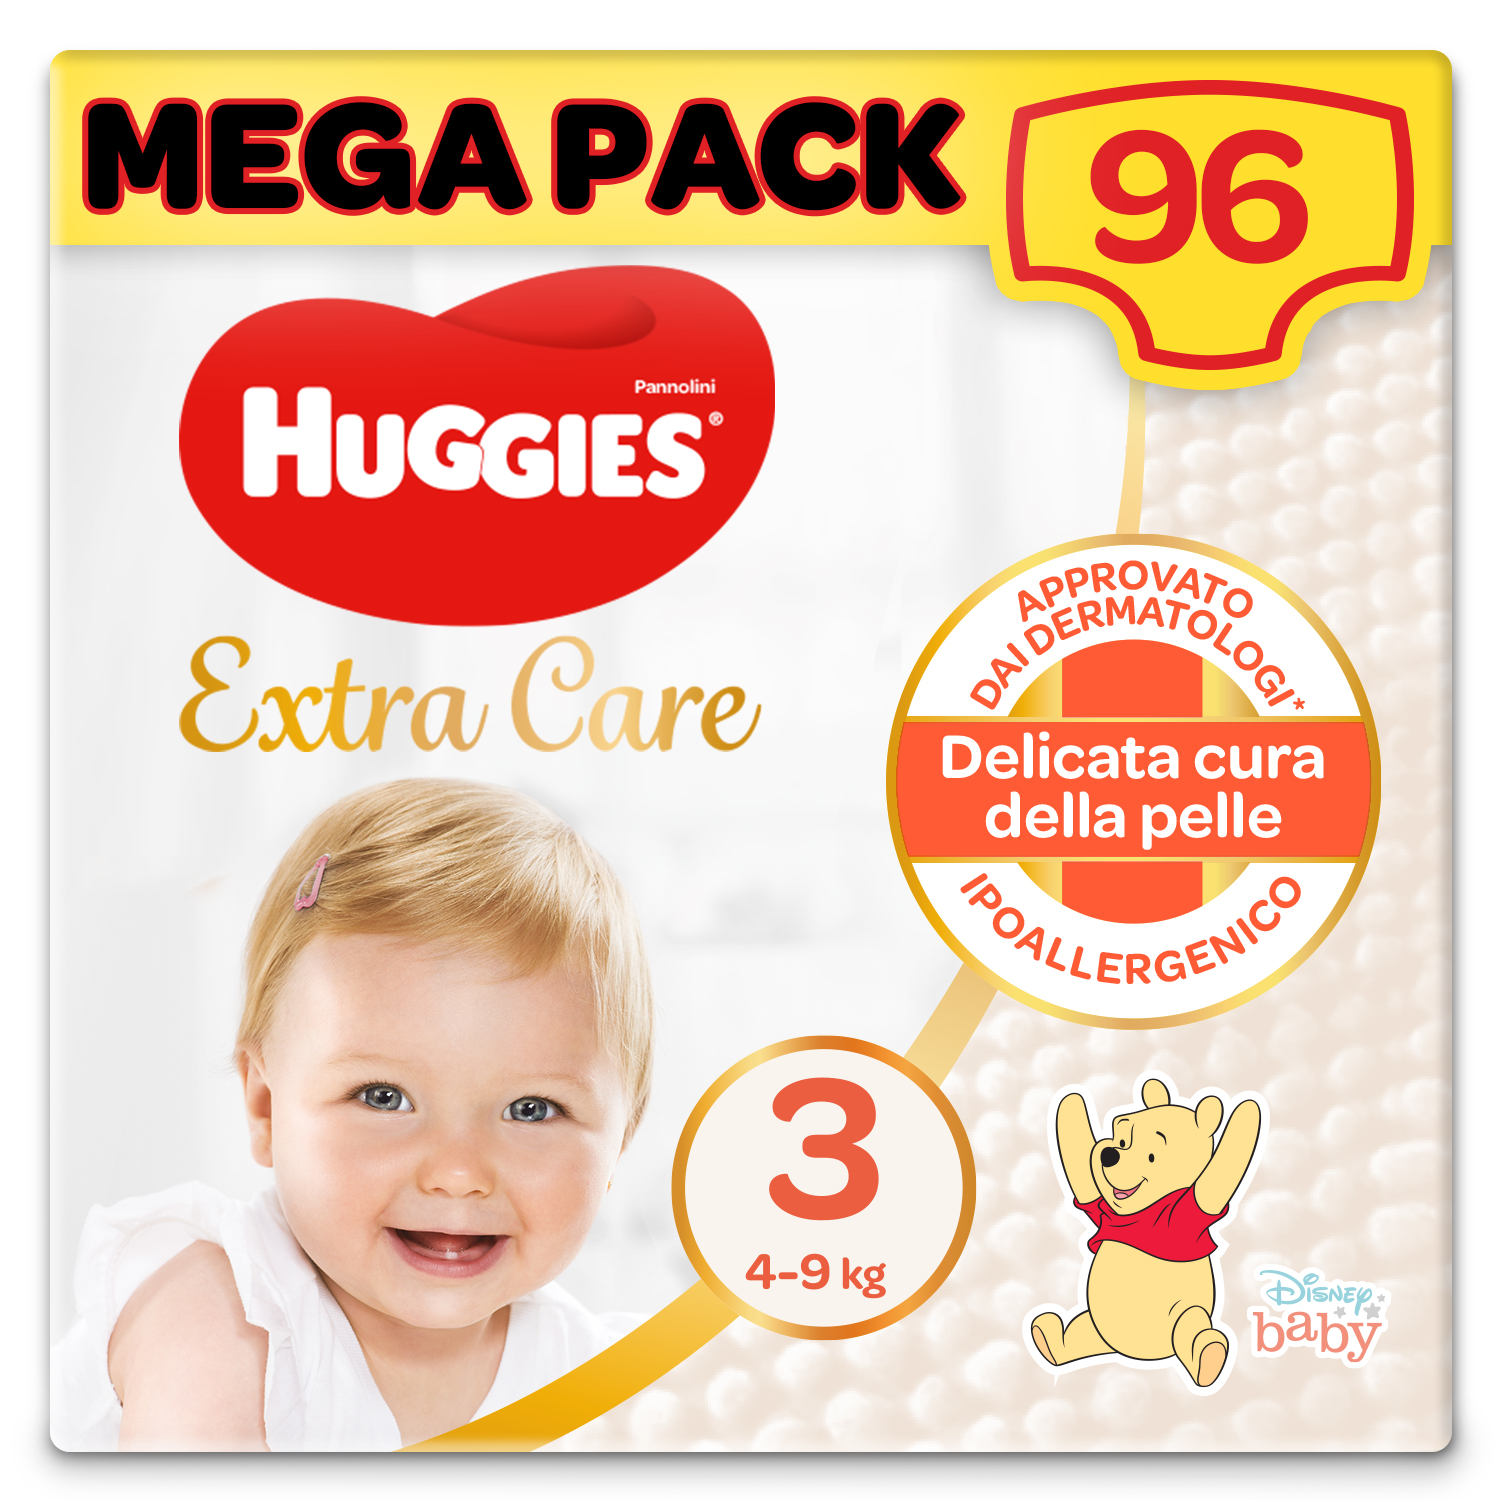 Huggies pannolini extra care mega pack. tg.3 (4-9 kg), 96 pannolini - Huggies